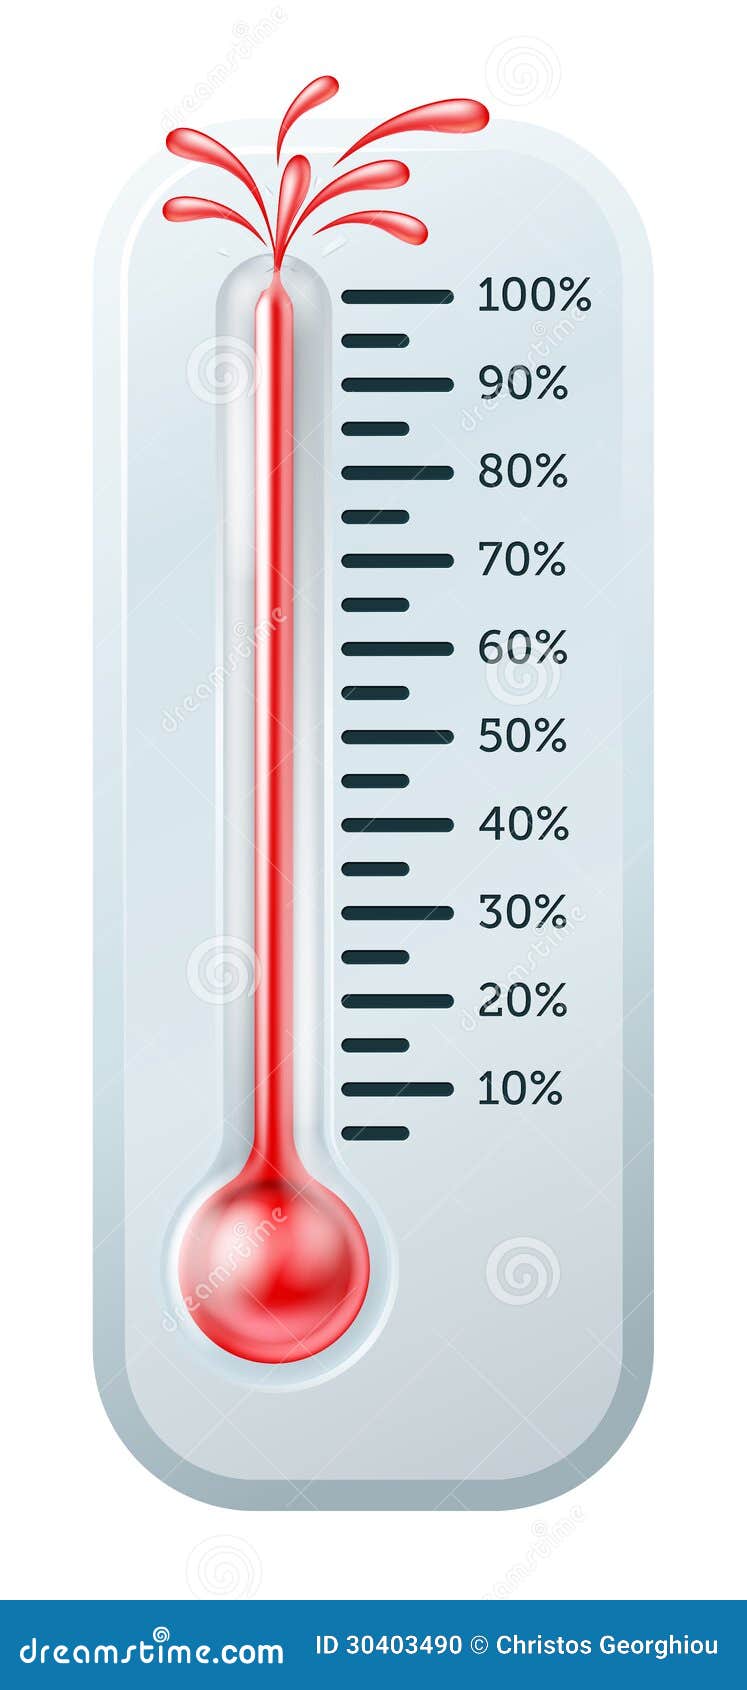 bursting-thermometer-illustration-red-al